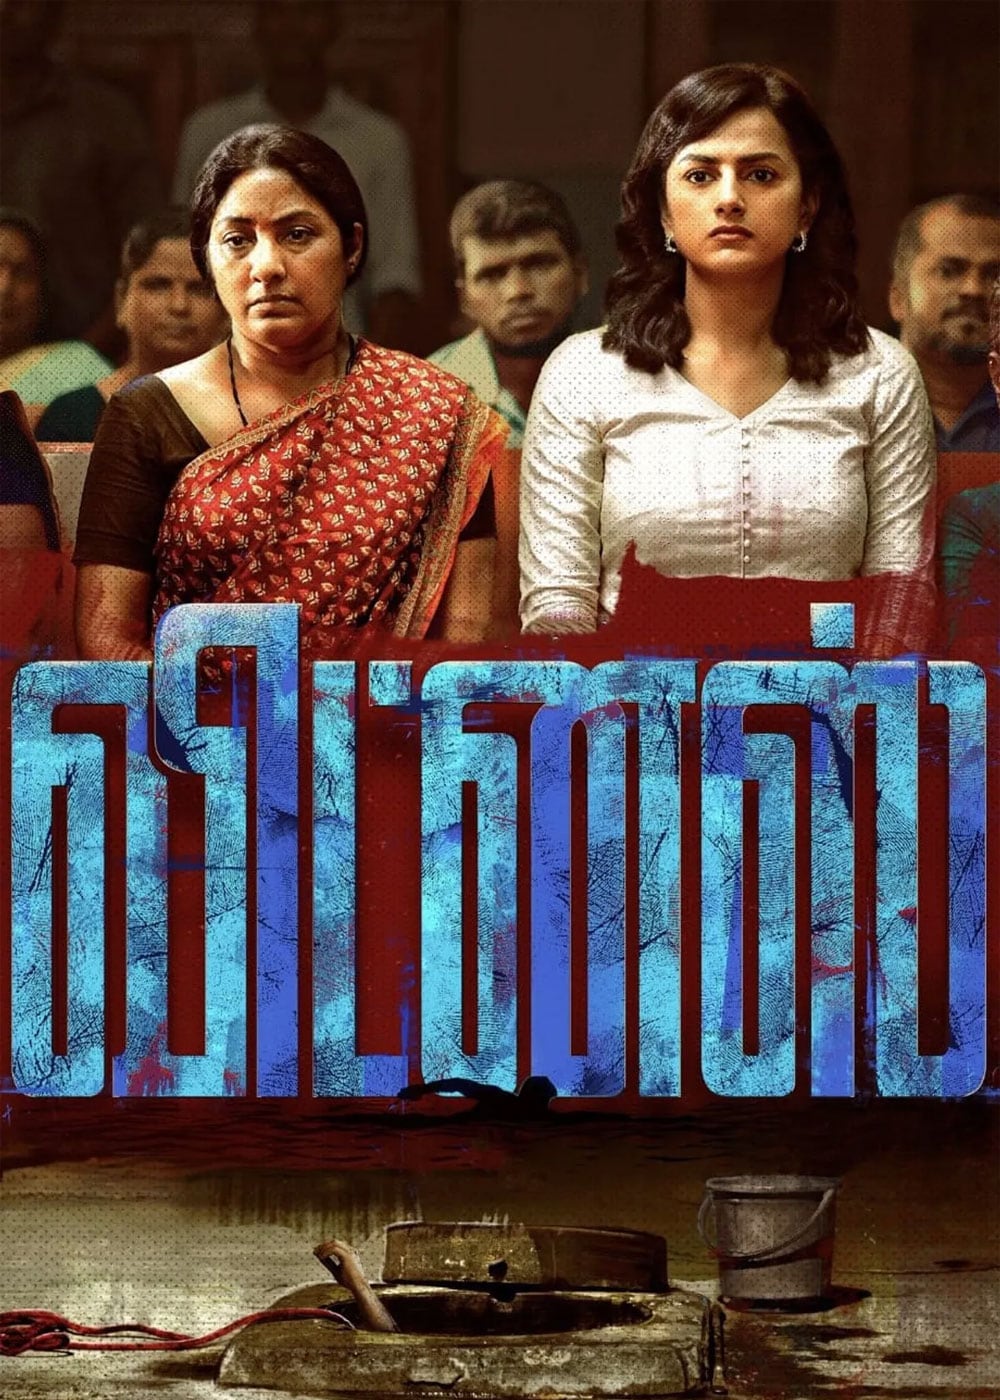 witness movie review tamil 2022